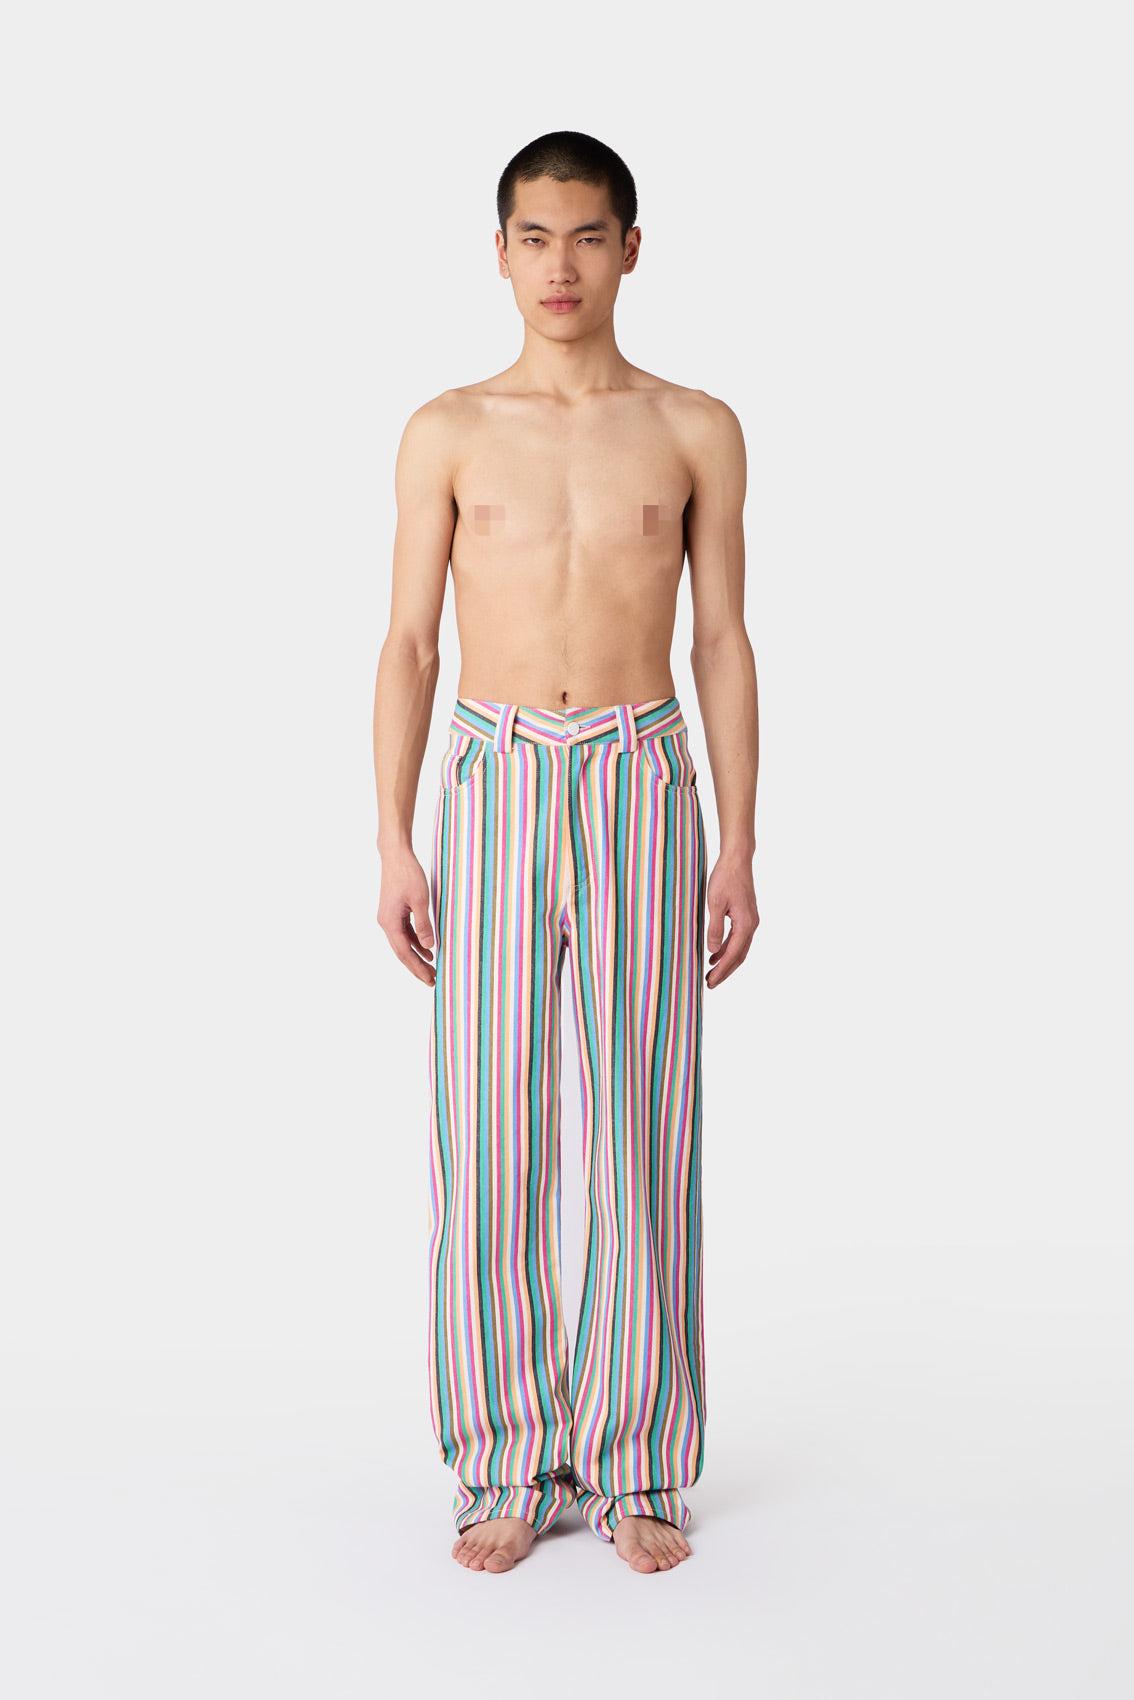 BELLIDENTRO PANTS / denim / multicolor stripes